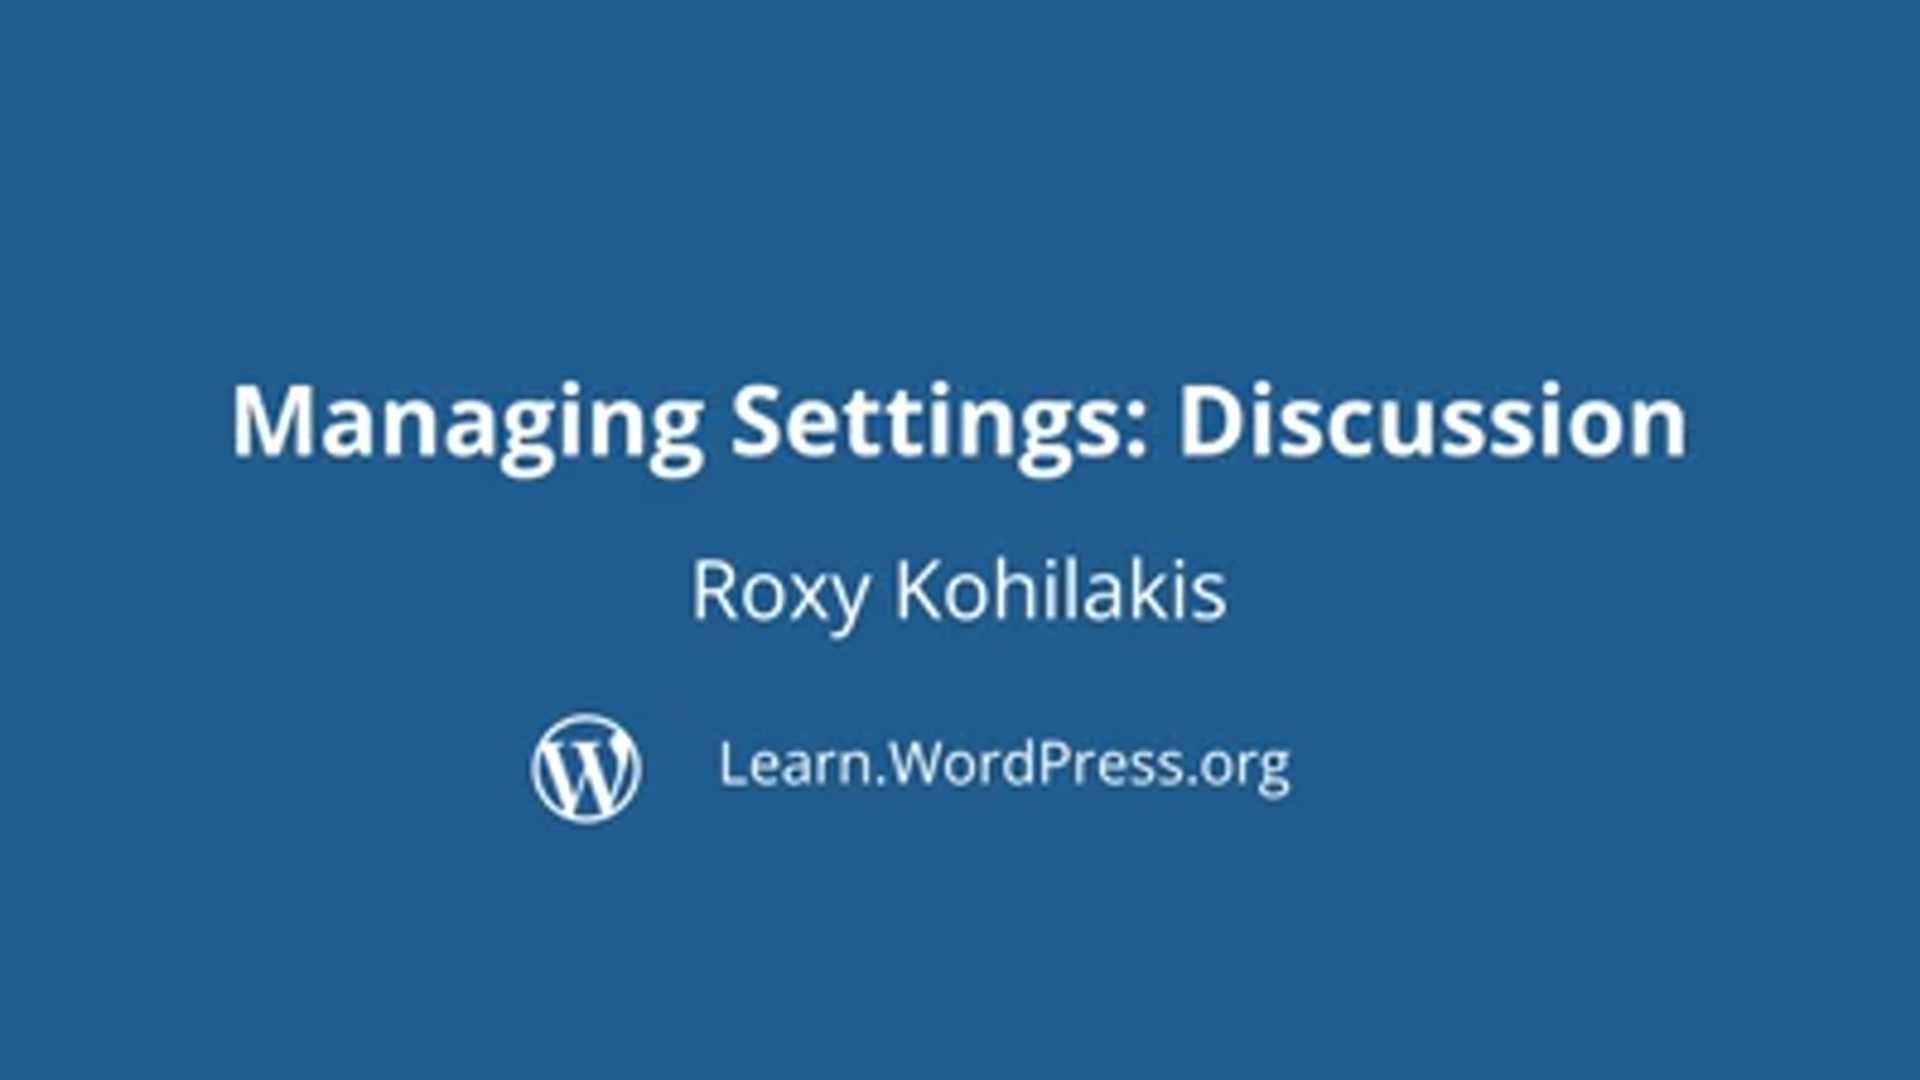 Roxy Kohilakis: Managing Discussion Settings